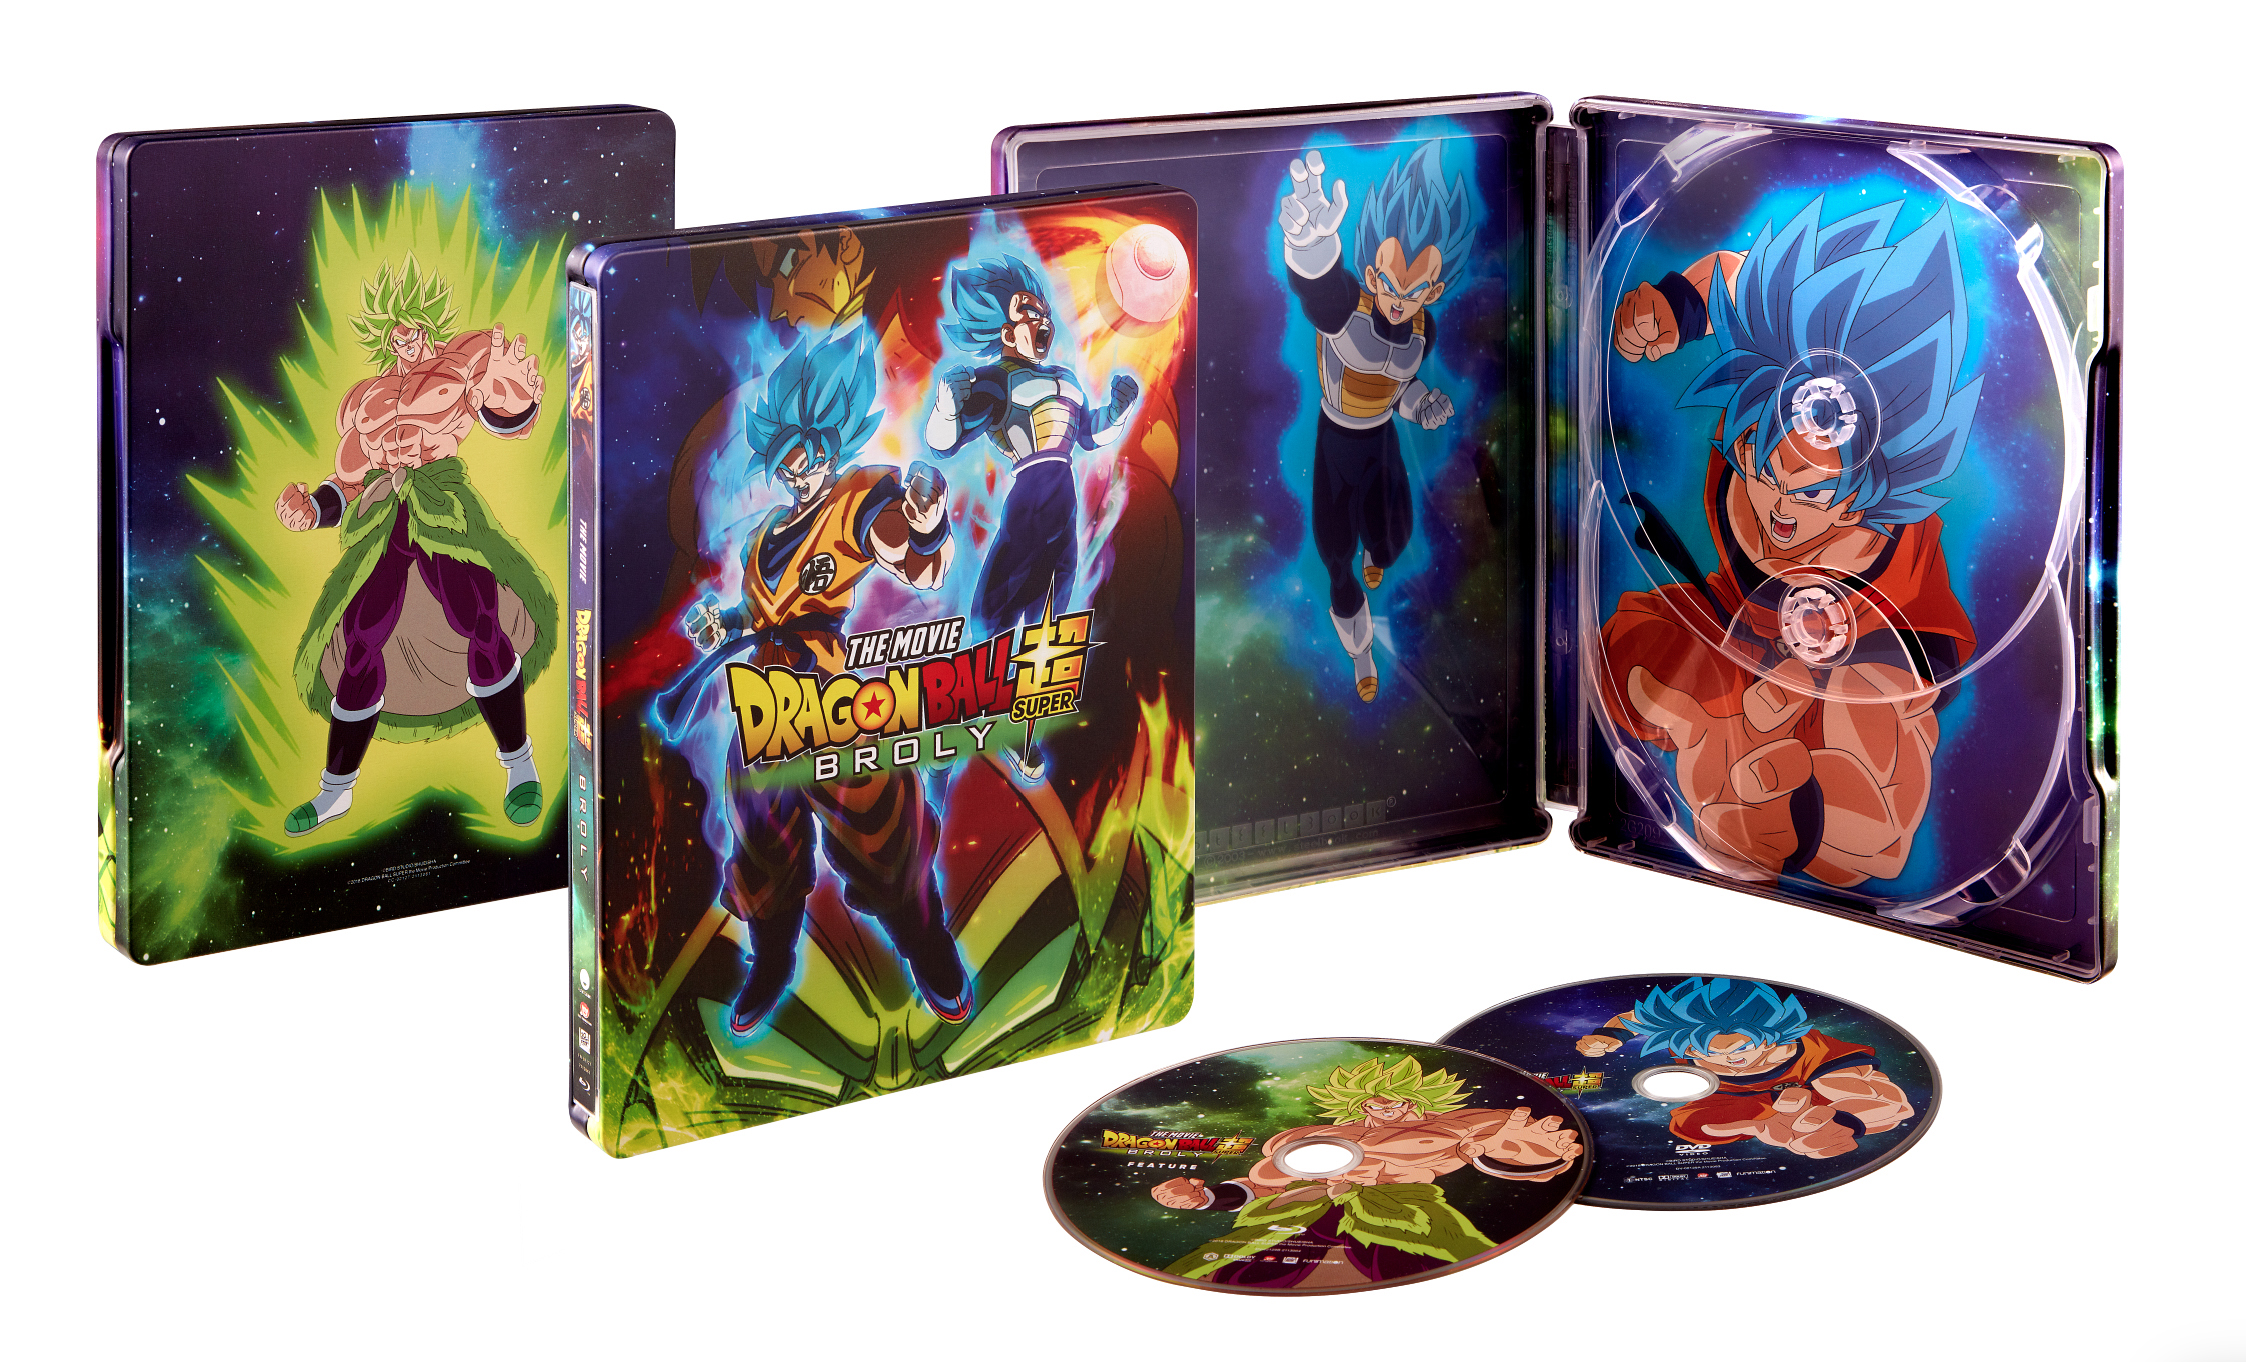 Dragon Ball Super: Broly [Includes Digital Copy] [Blu-ray/DVD] by